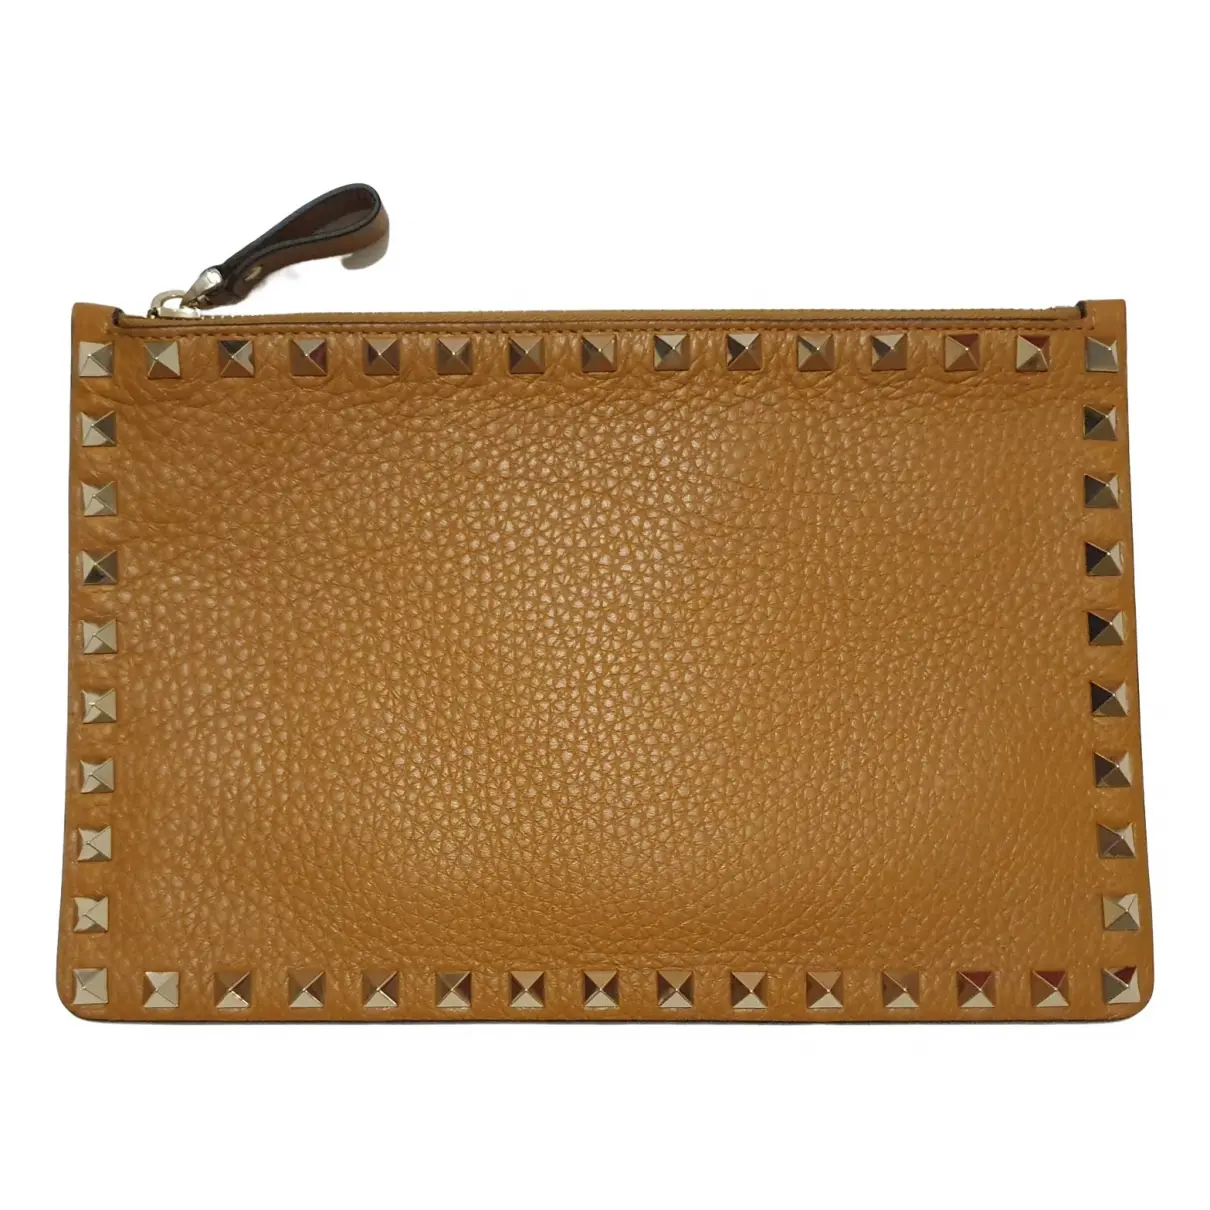 Buy Valentino Garavani Leather clutch bag online